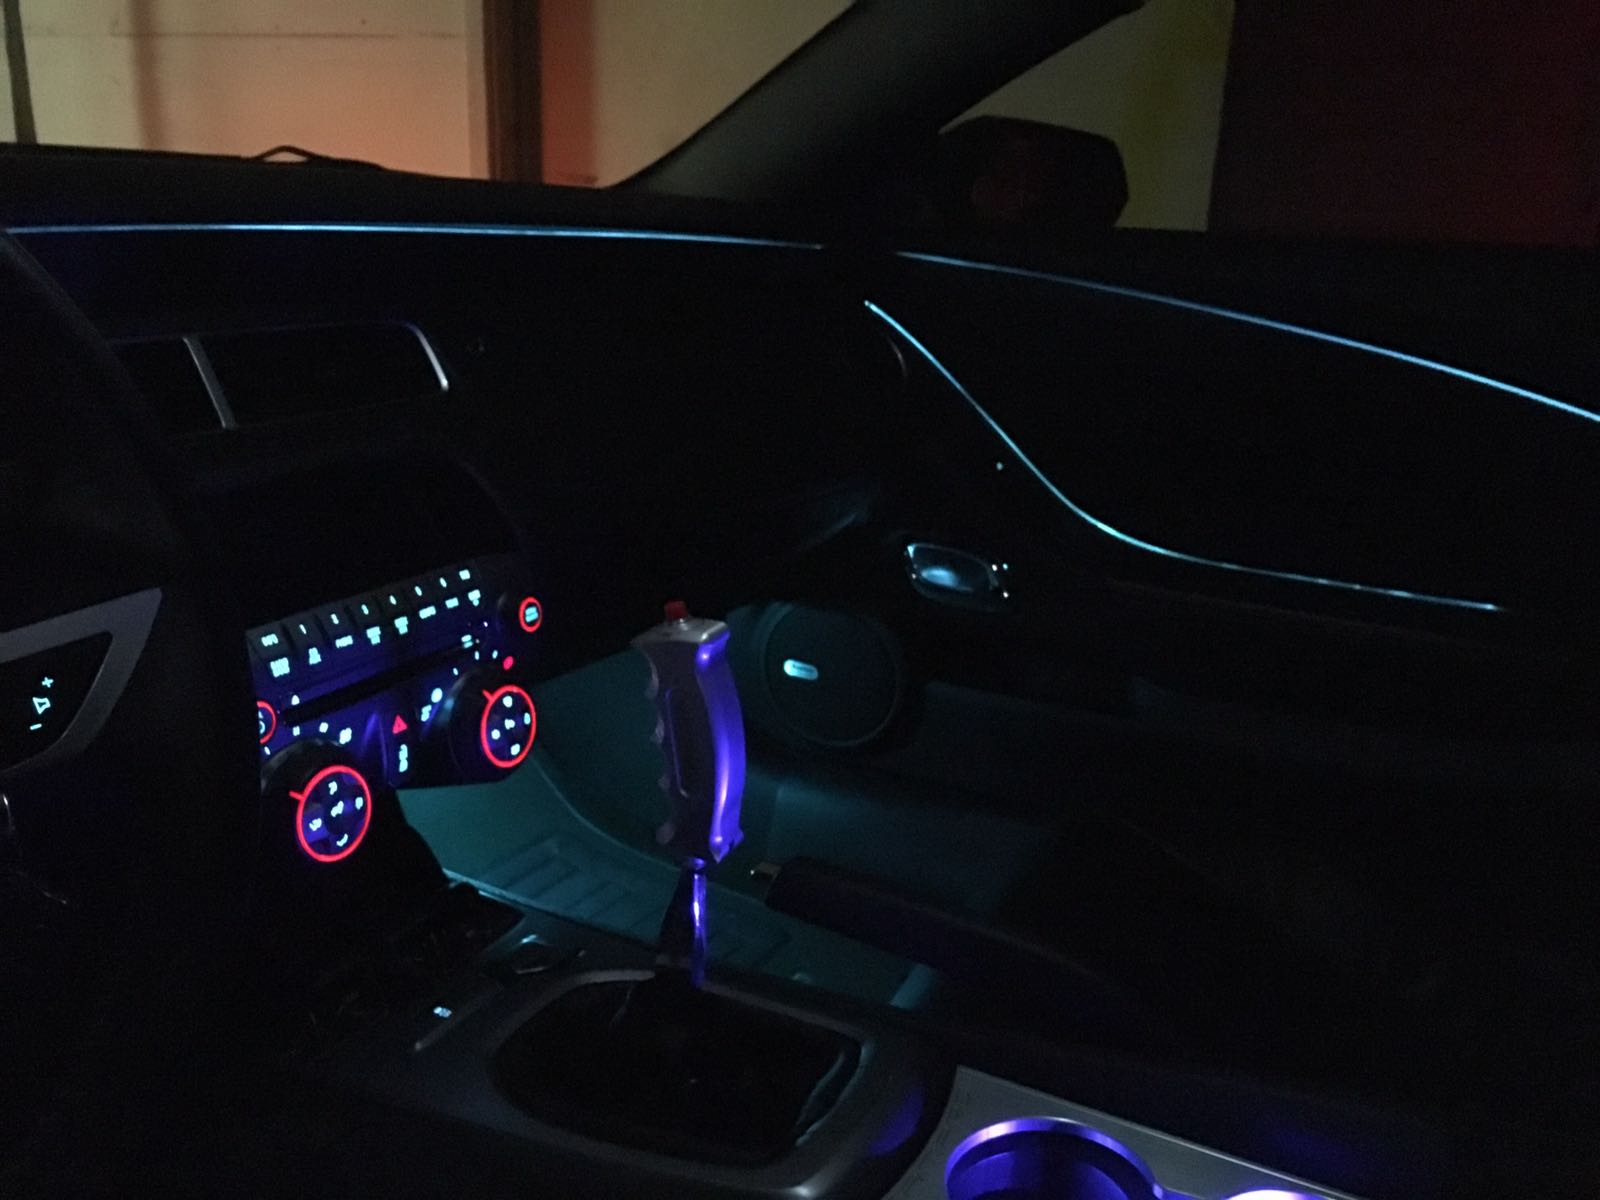 2017 Camaro Interior Lighting Kit Review Home Decor